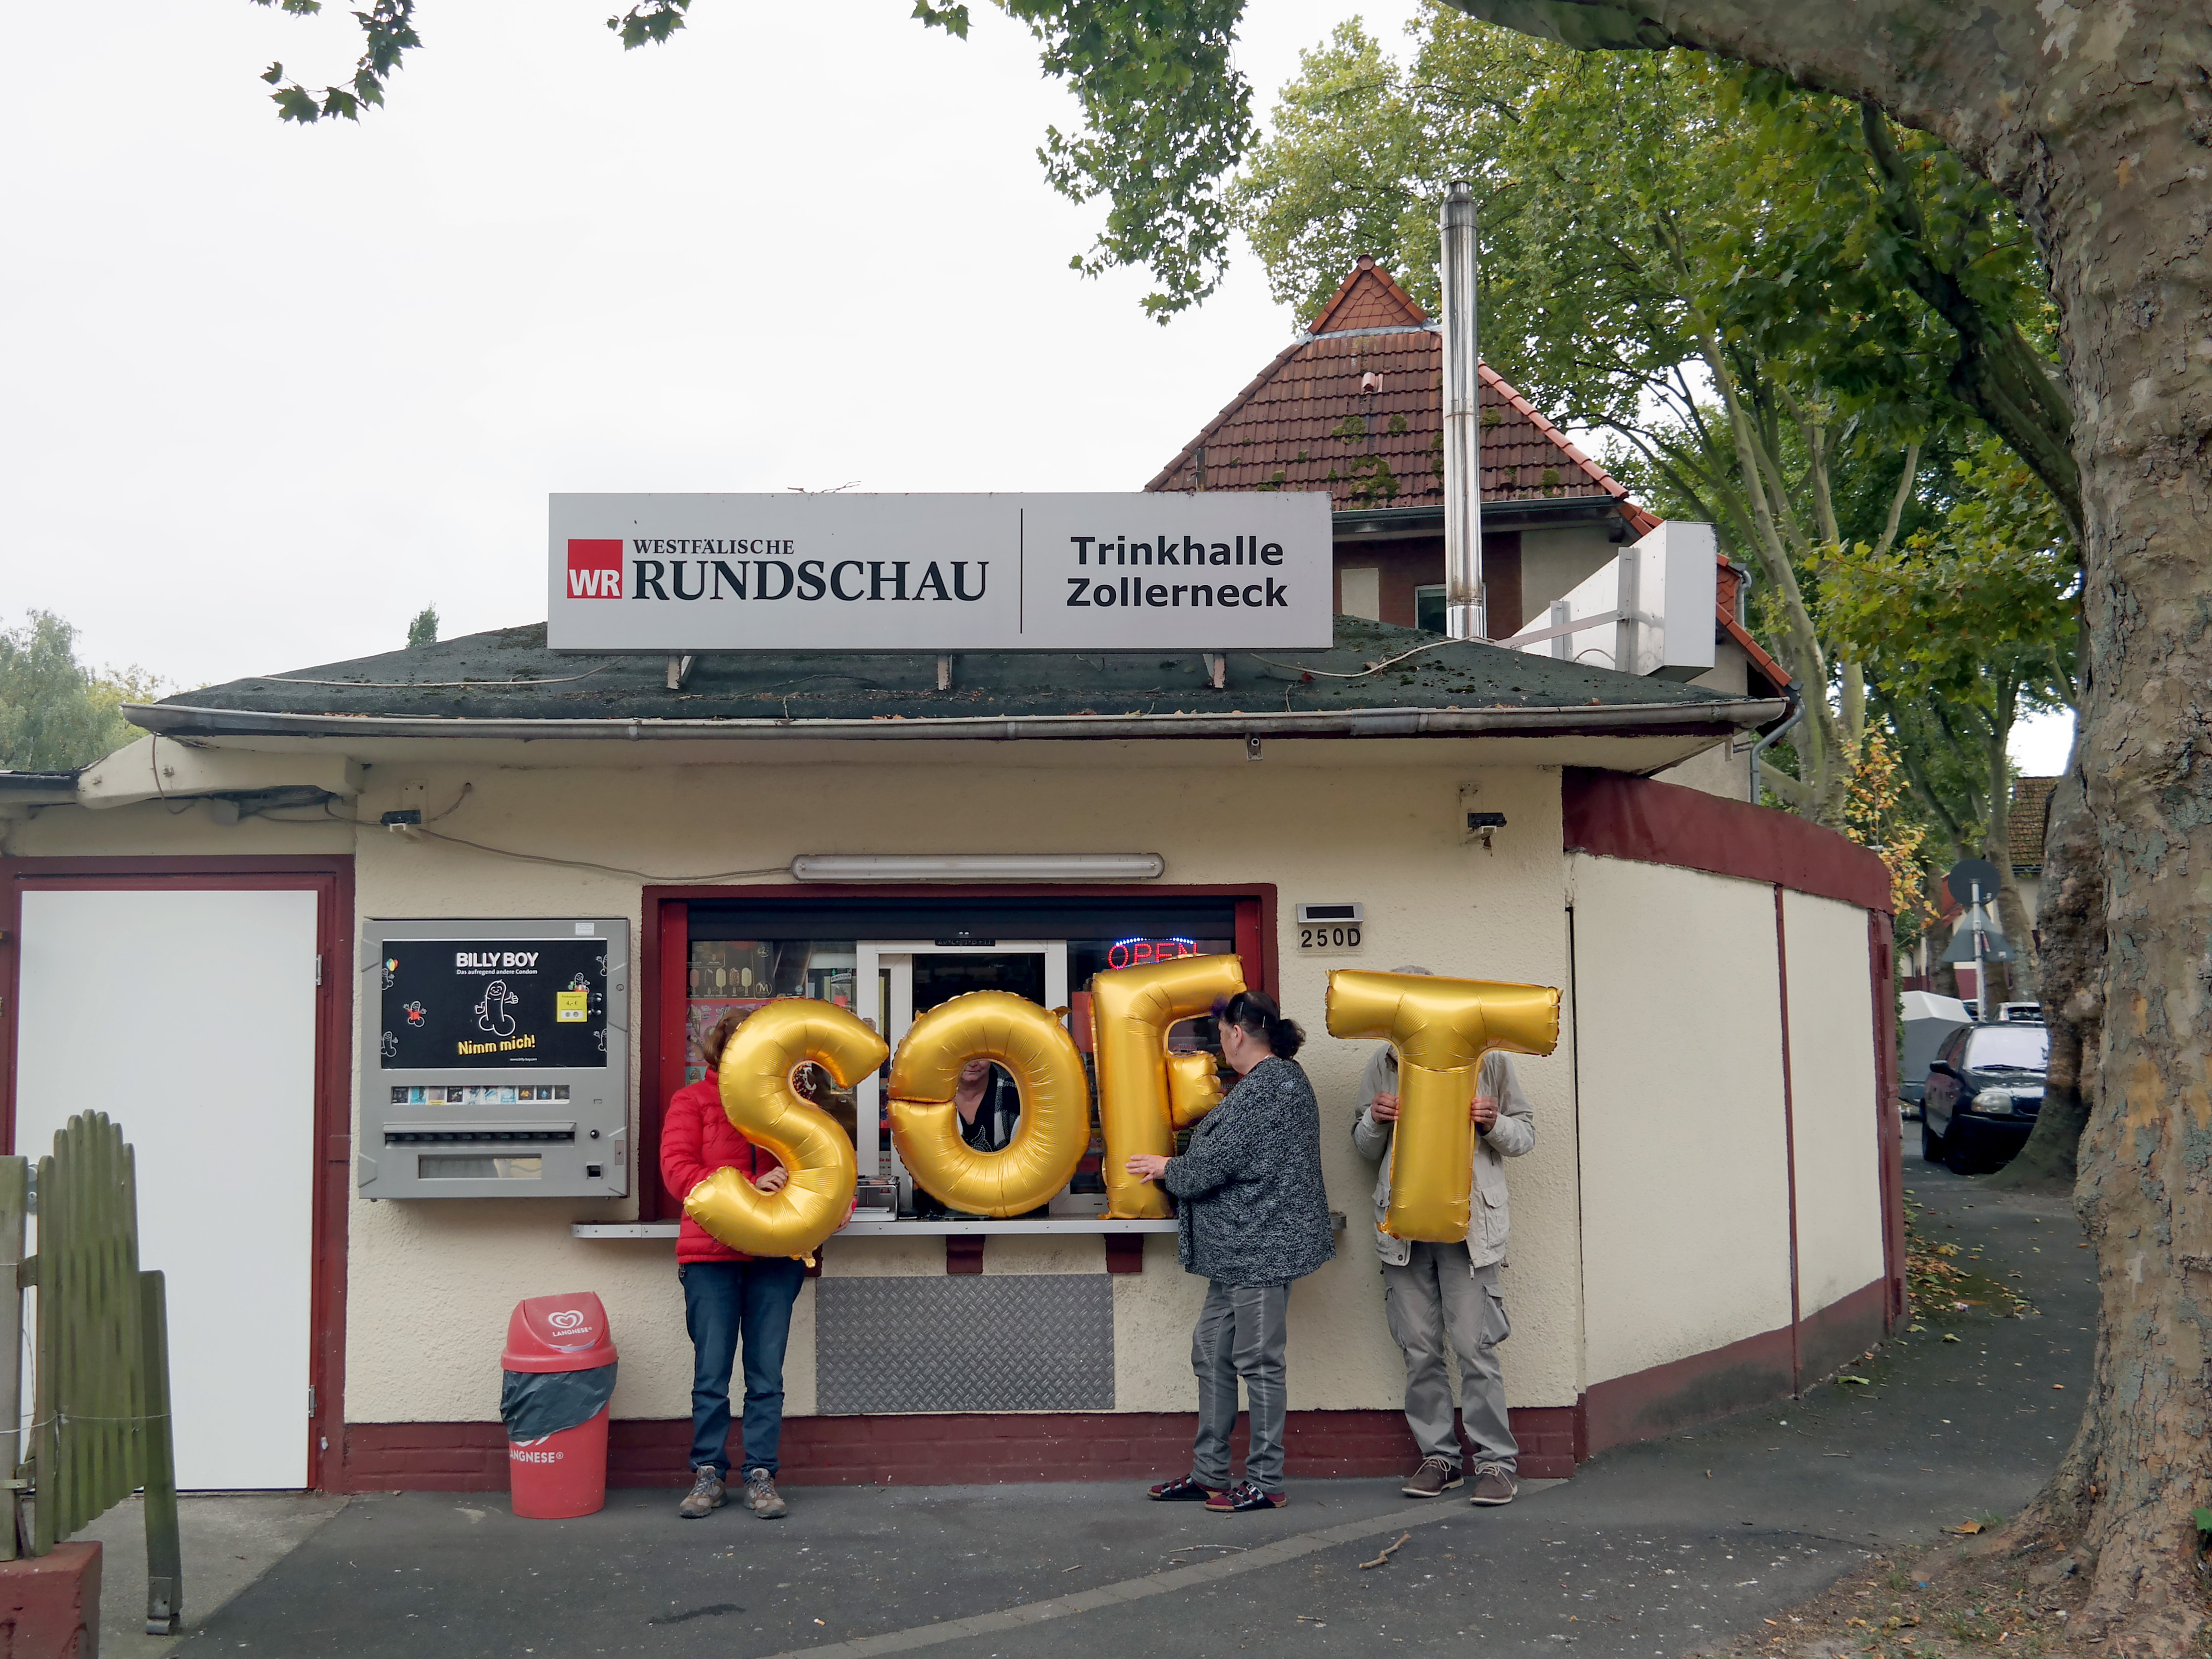 Germany, Dortmund, Dortmund Boevinghausen, Der Kiosk an der Ecke (Trinkhalle Zollerneck) - Soft, Silence was Golden, gold balloons